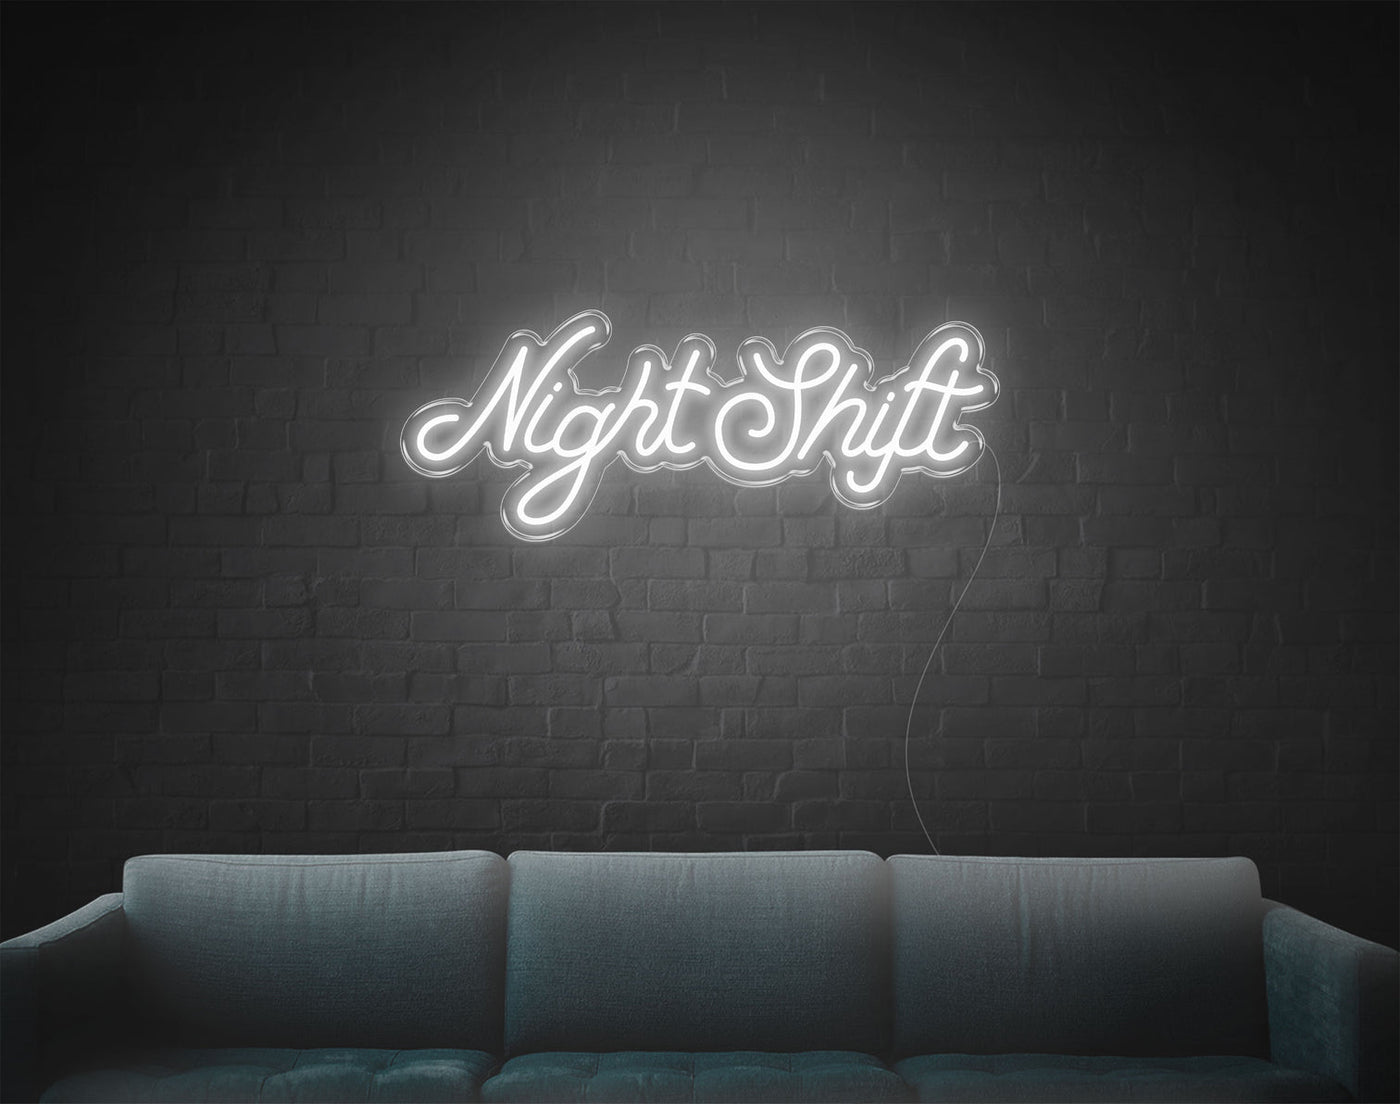 Nightshift LED Neon Sign - 11inch x 30inchWhite